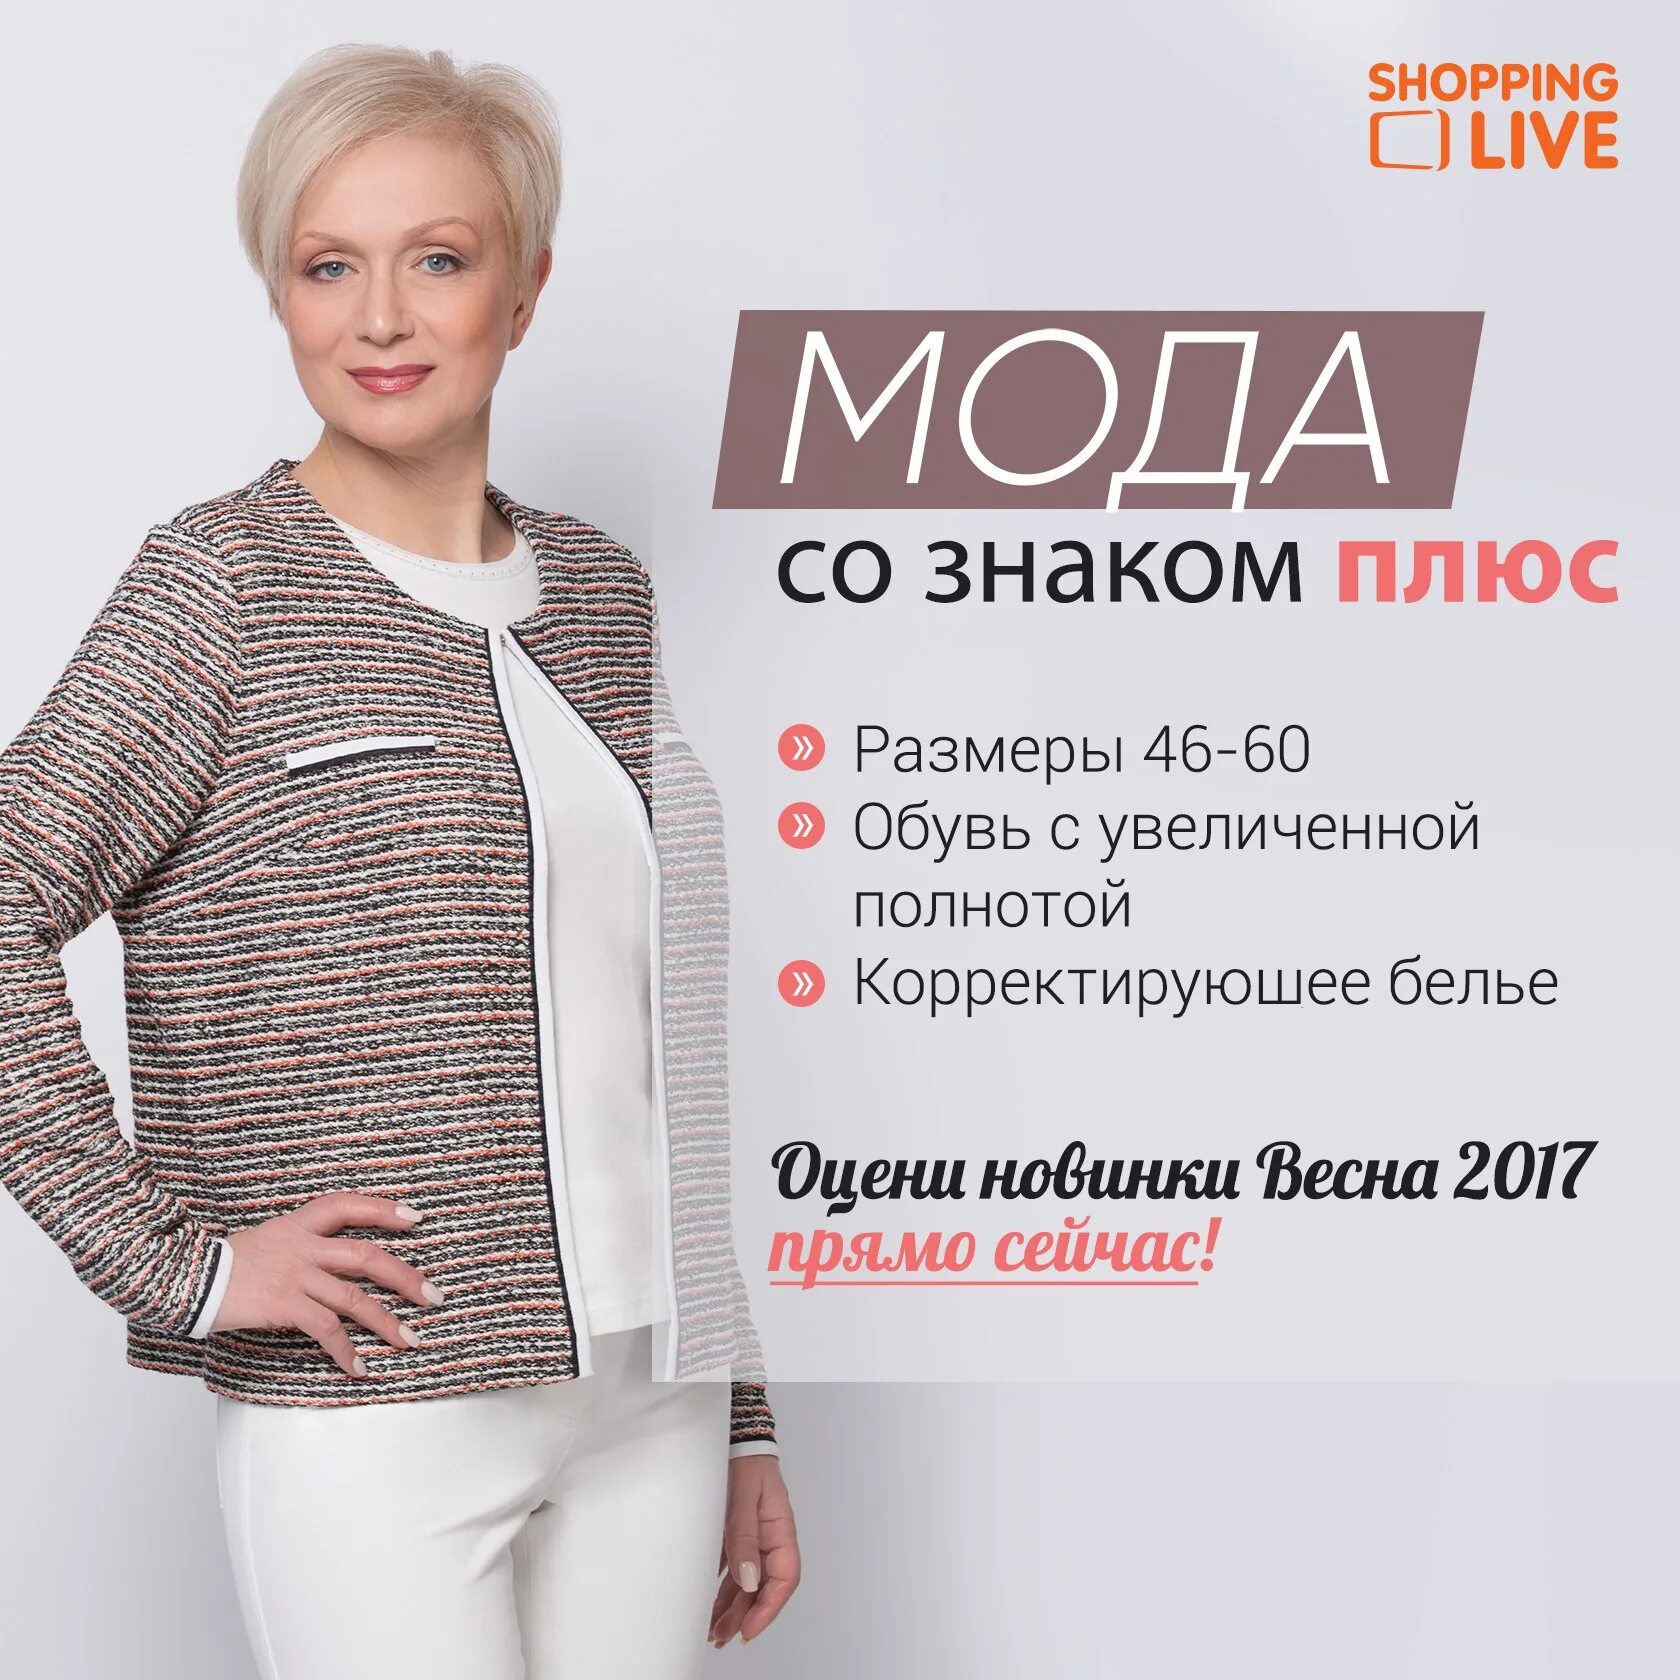 Shopping live эфир. Shopping Live интернет-магазин. Shopping Live интернет магазин каталог. SHOPPINGLIVE.ru интернет магазин. Каталог одежды.